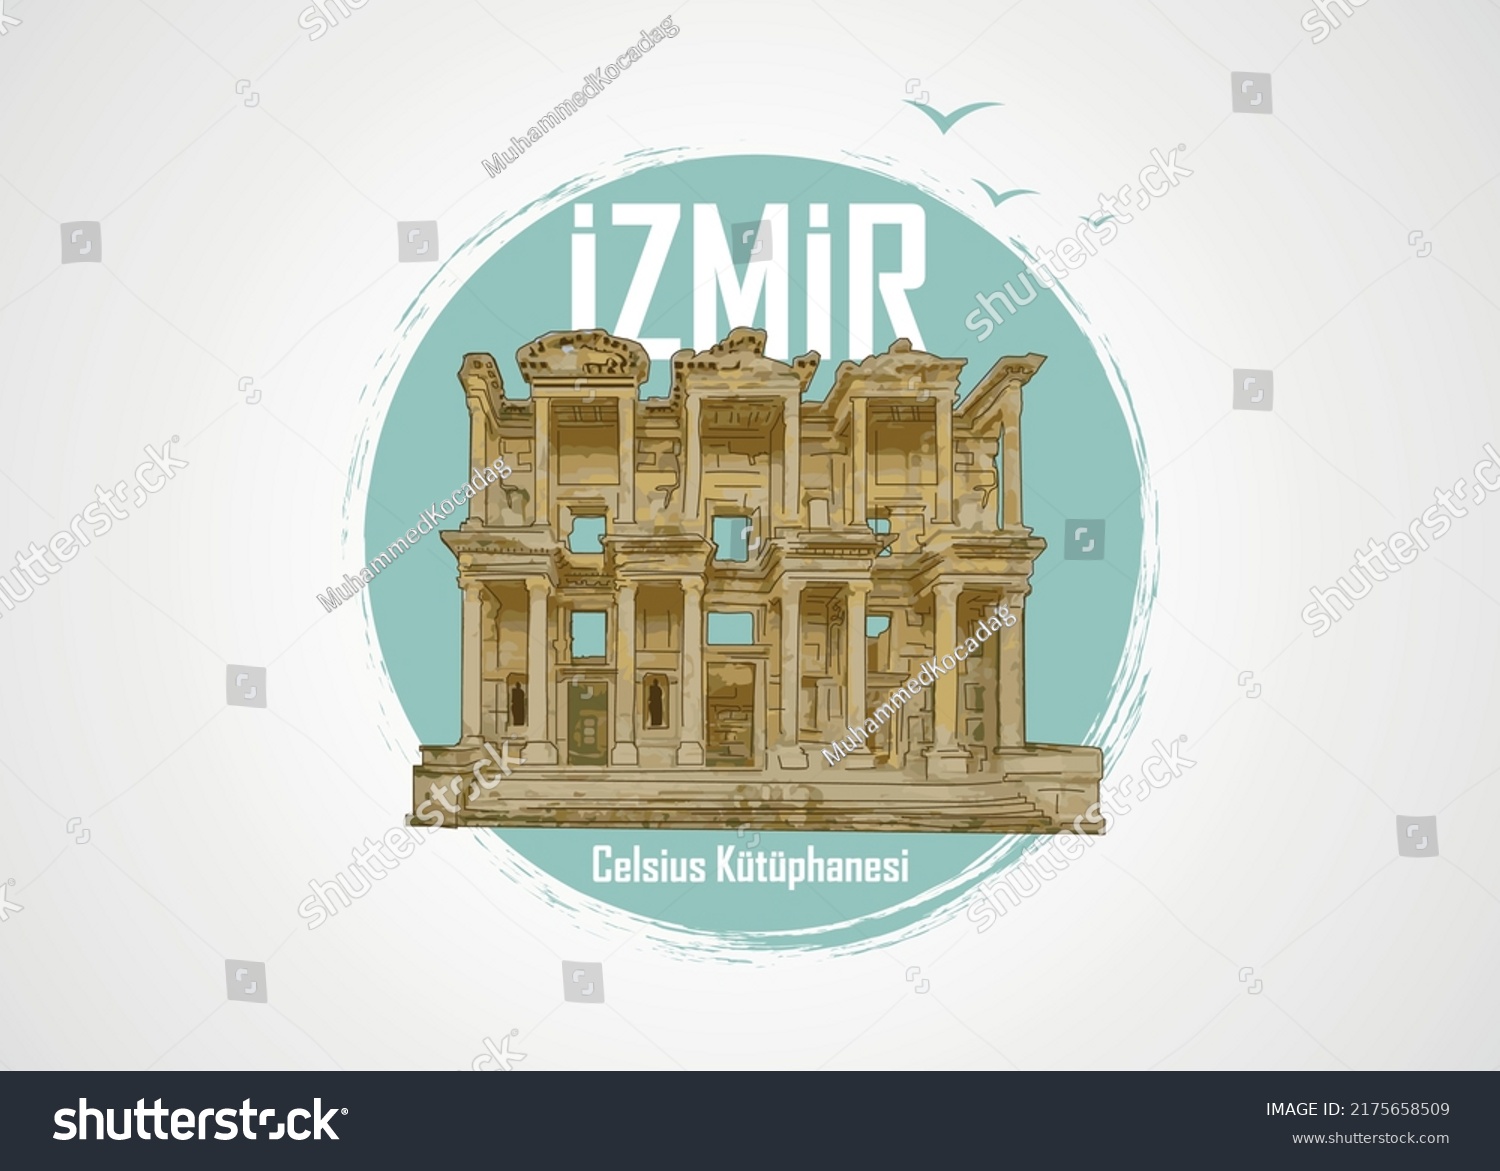 İzmir Celsius Kütüphanesi. Translated: Izmir Celsius Library in the ancient city of Ephesus, Turkey. Vector illustration #2175658509